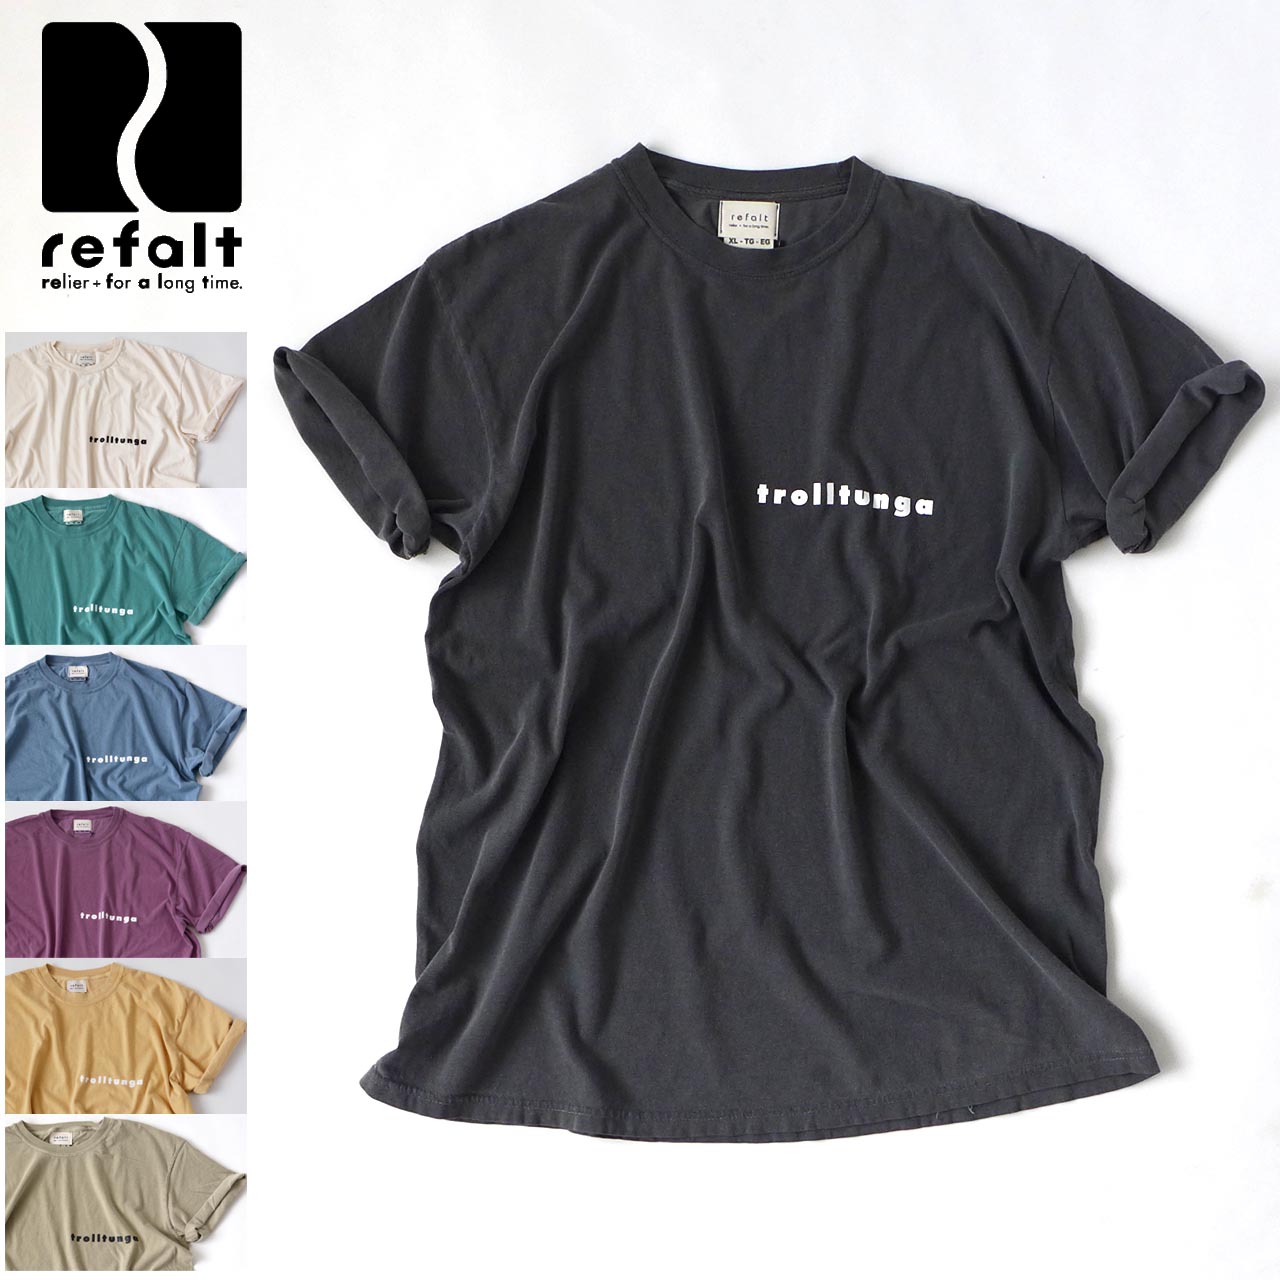 refalt original wear [リファルト オリジナルウエア] ヴィンテージ風ビッグTシャツ「trolltunga tee」 [tee-Tro1101] オリジナルTシャツ・トロルトゥンガ ・メンズ・レディース・半袖t・アウトドア・ビンテージライク・古着風・後染・ピグメント・MEN'S/ LADY'S [2022SS]